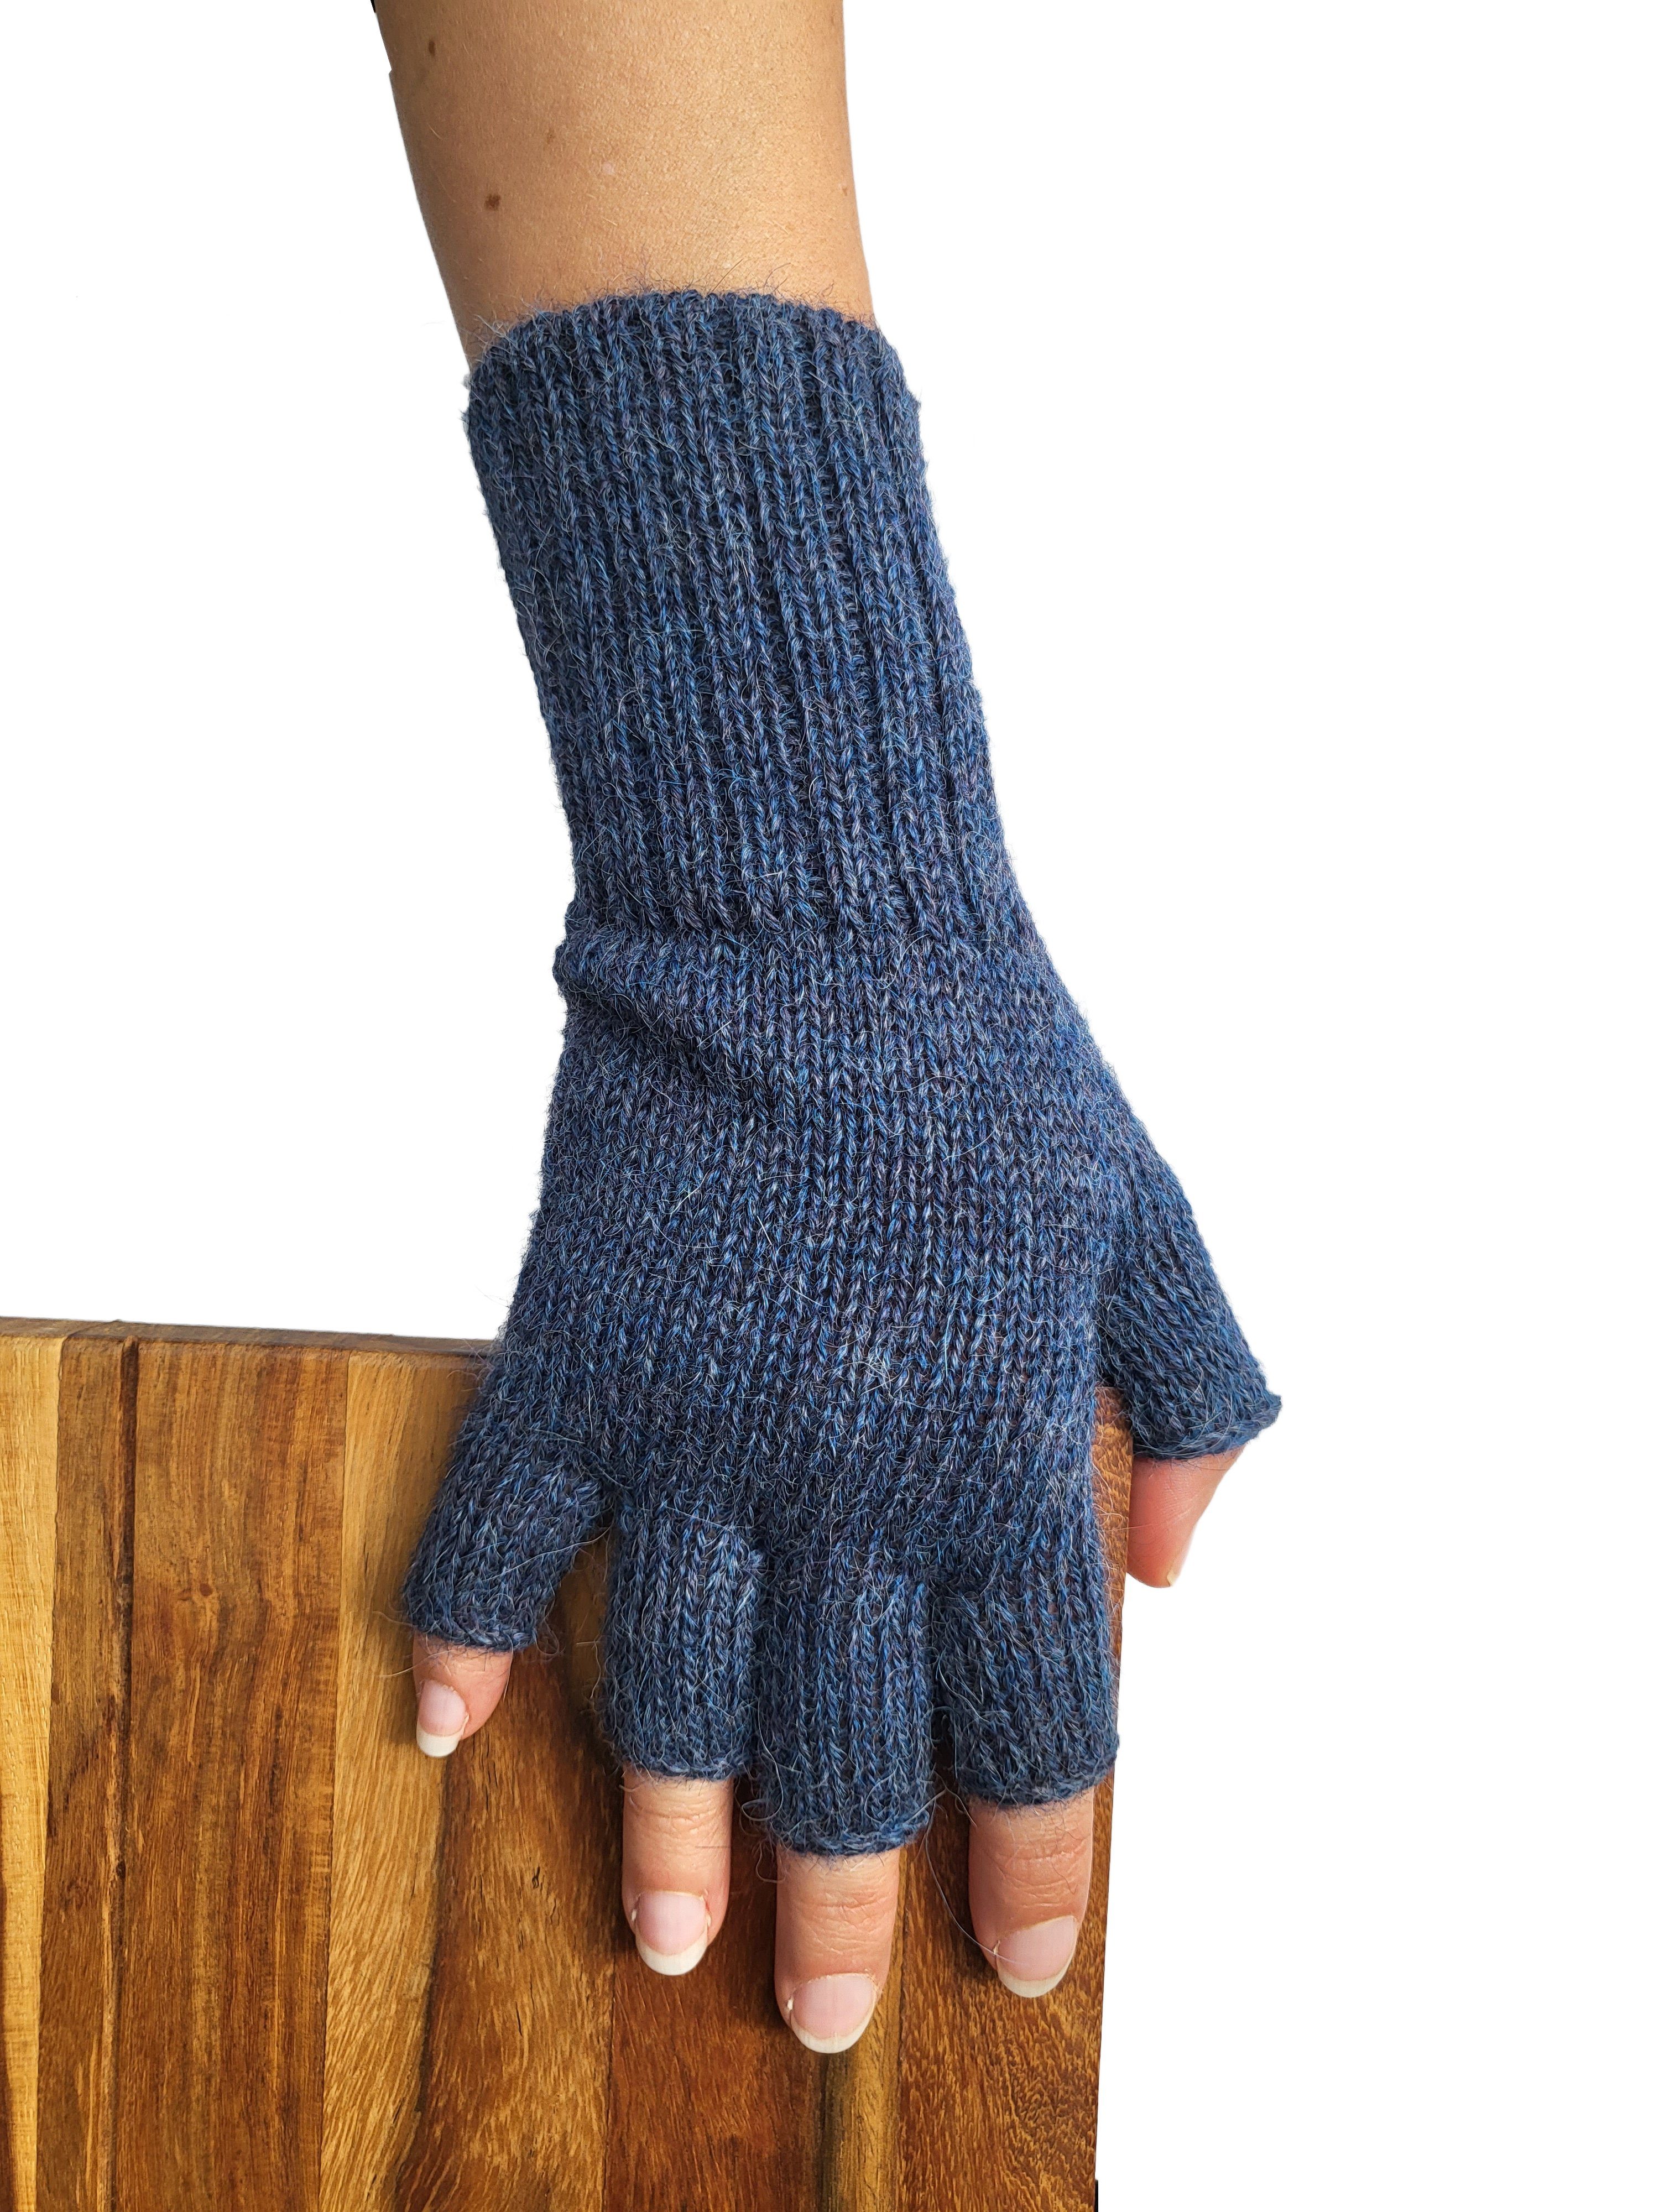 Posh Gear Strickhandschuhe Guantiless Alpaka Halb-Fingerhandschuhe dunkel blau